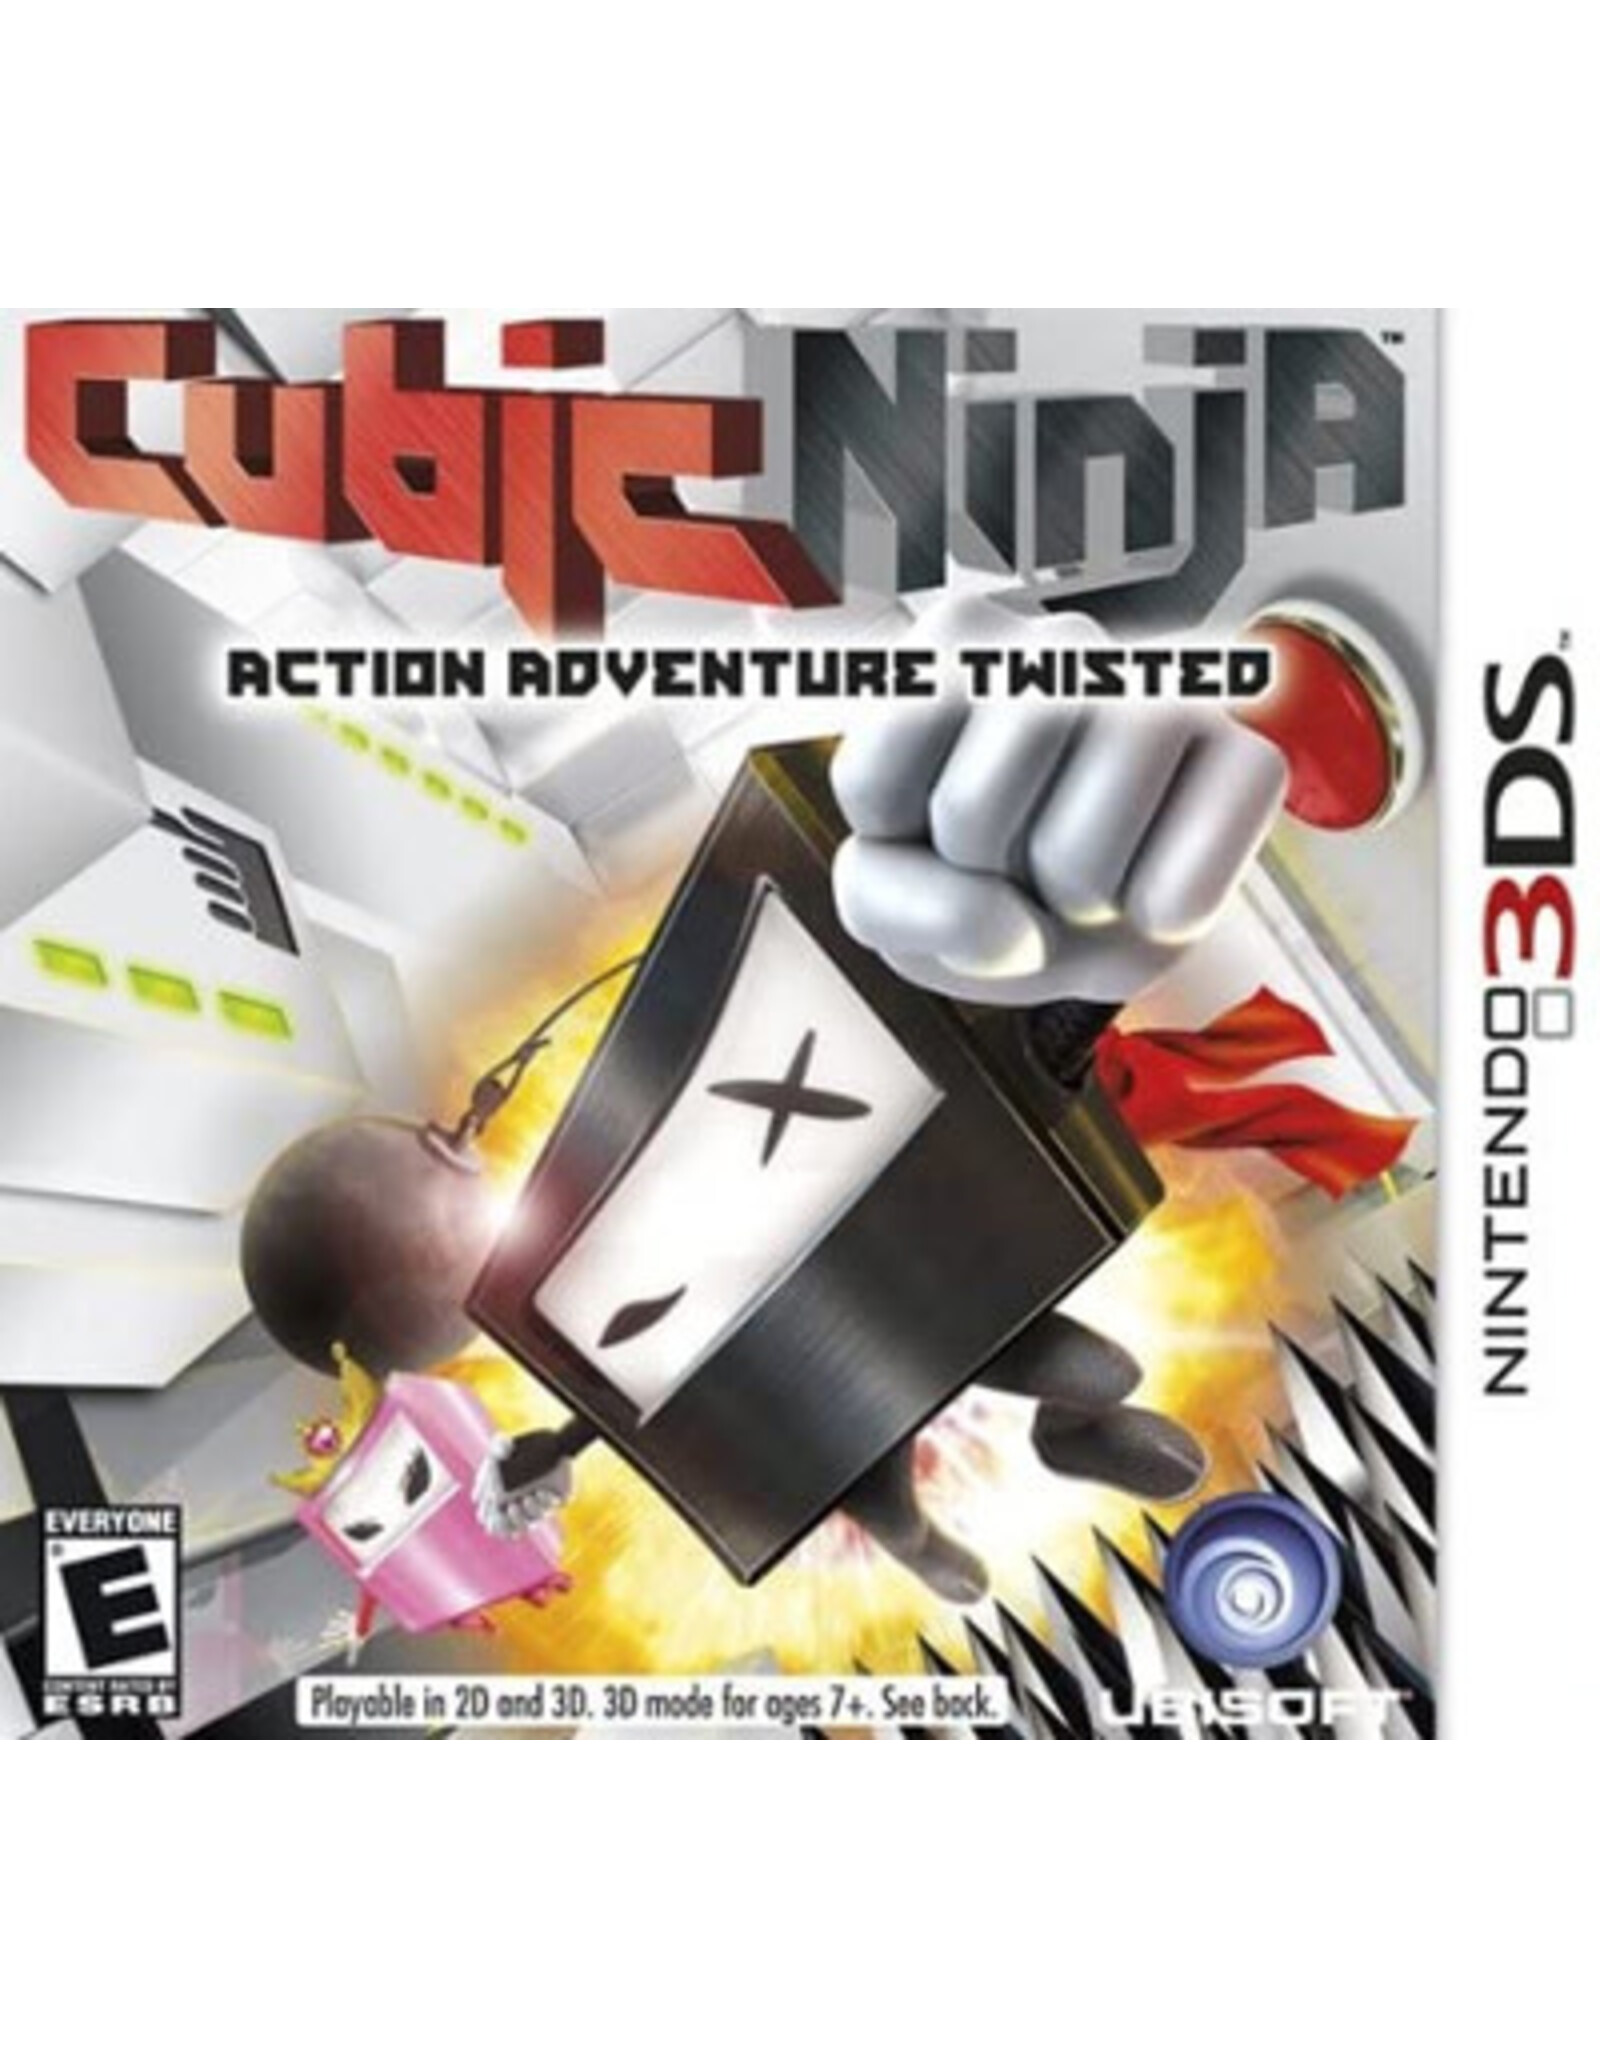 Nintendo 3DS Cubic Ninja (Used)